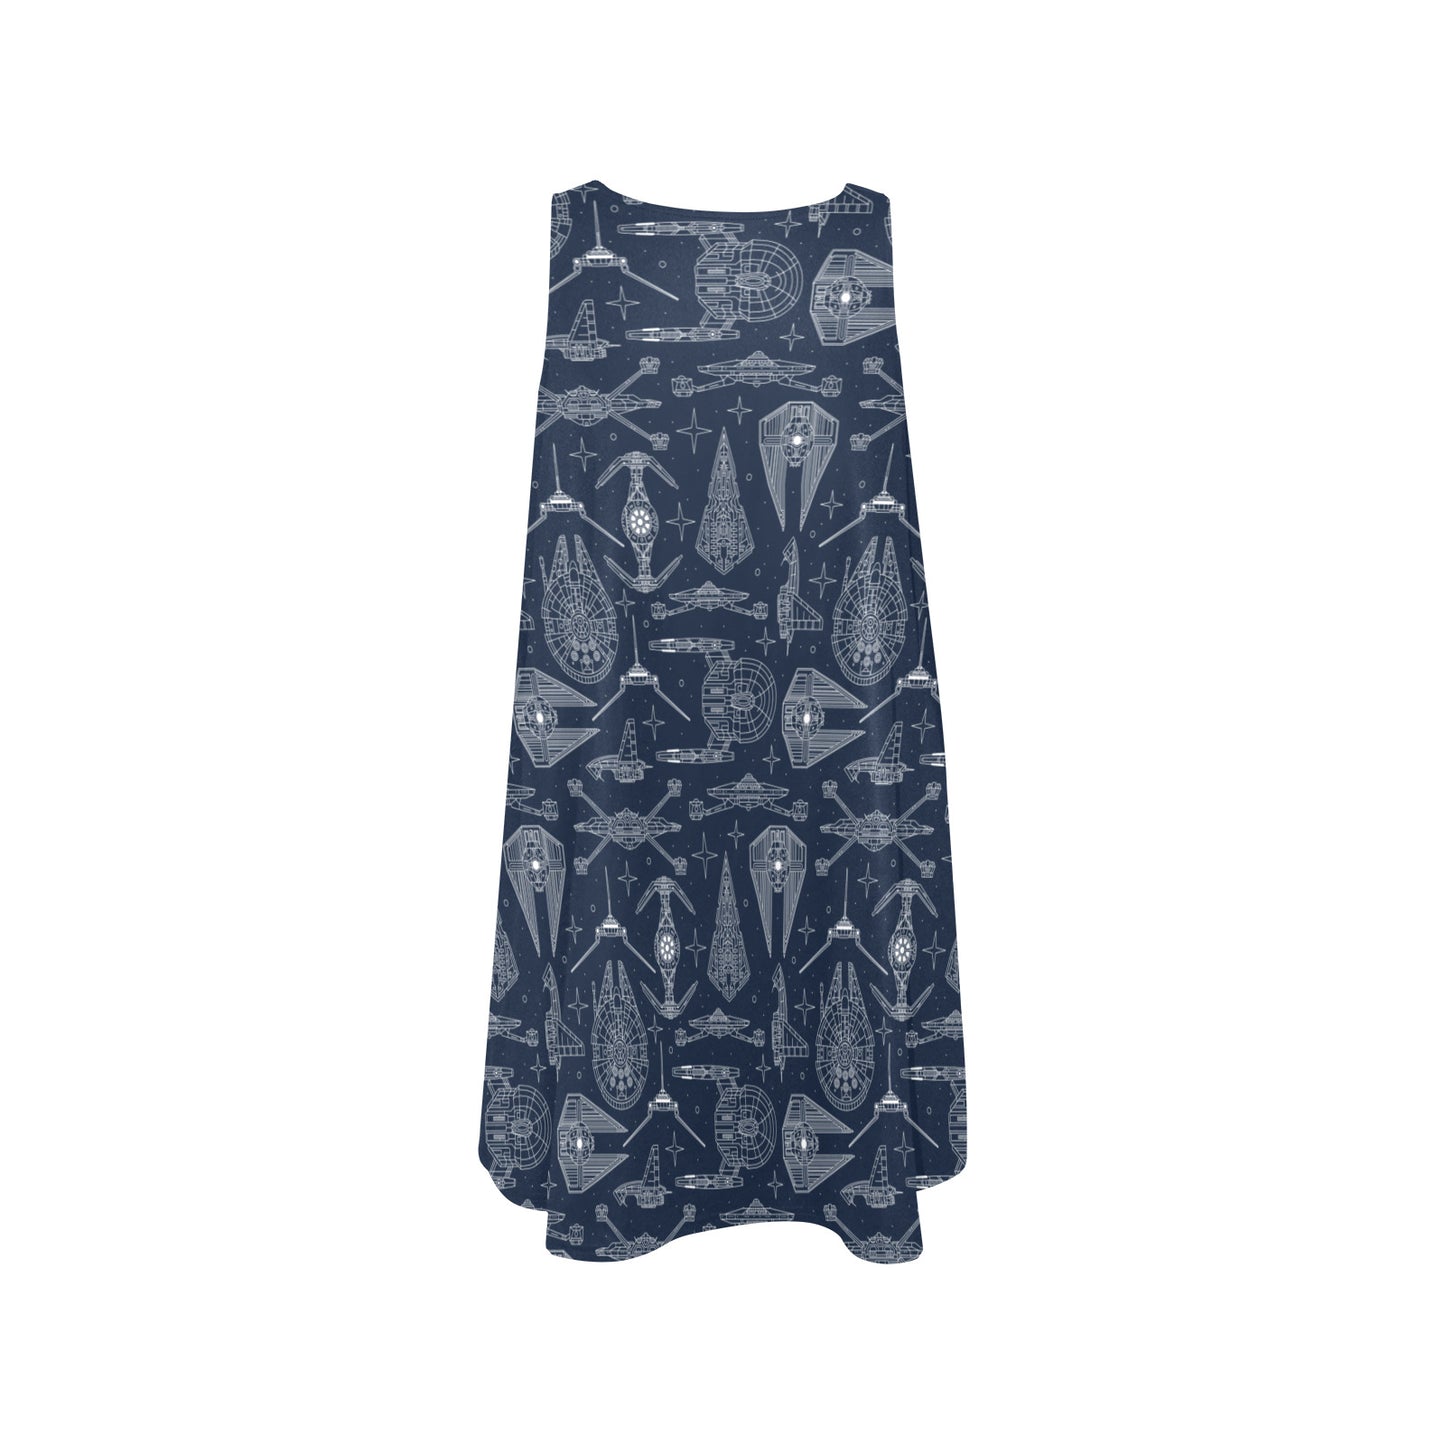 Galactic Blue Prints Sleeveless A-Line Pocket Dress